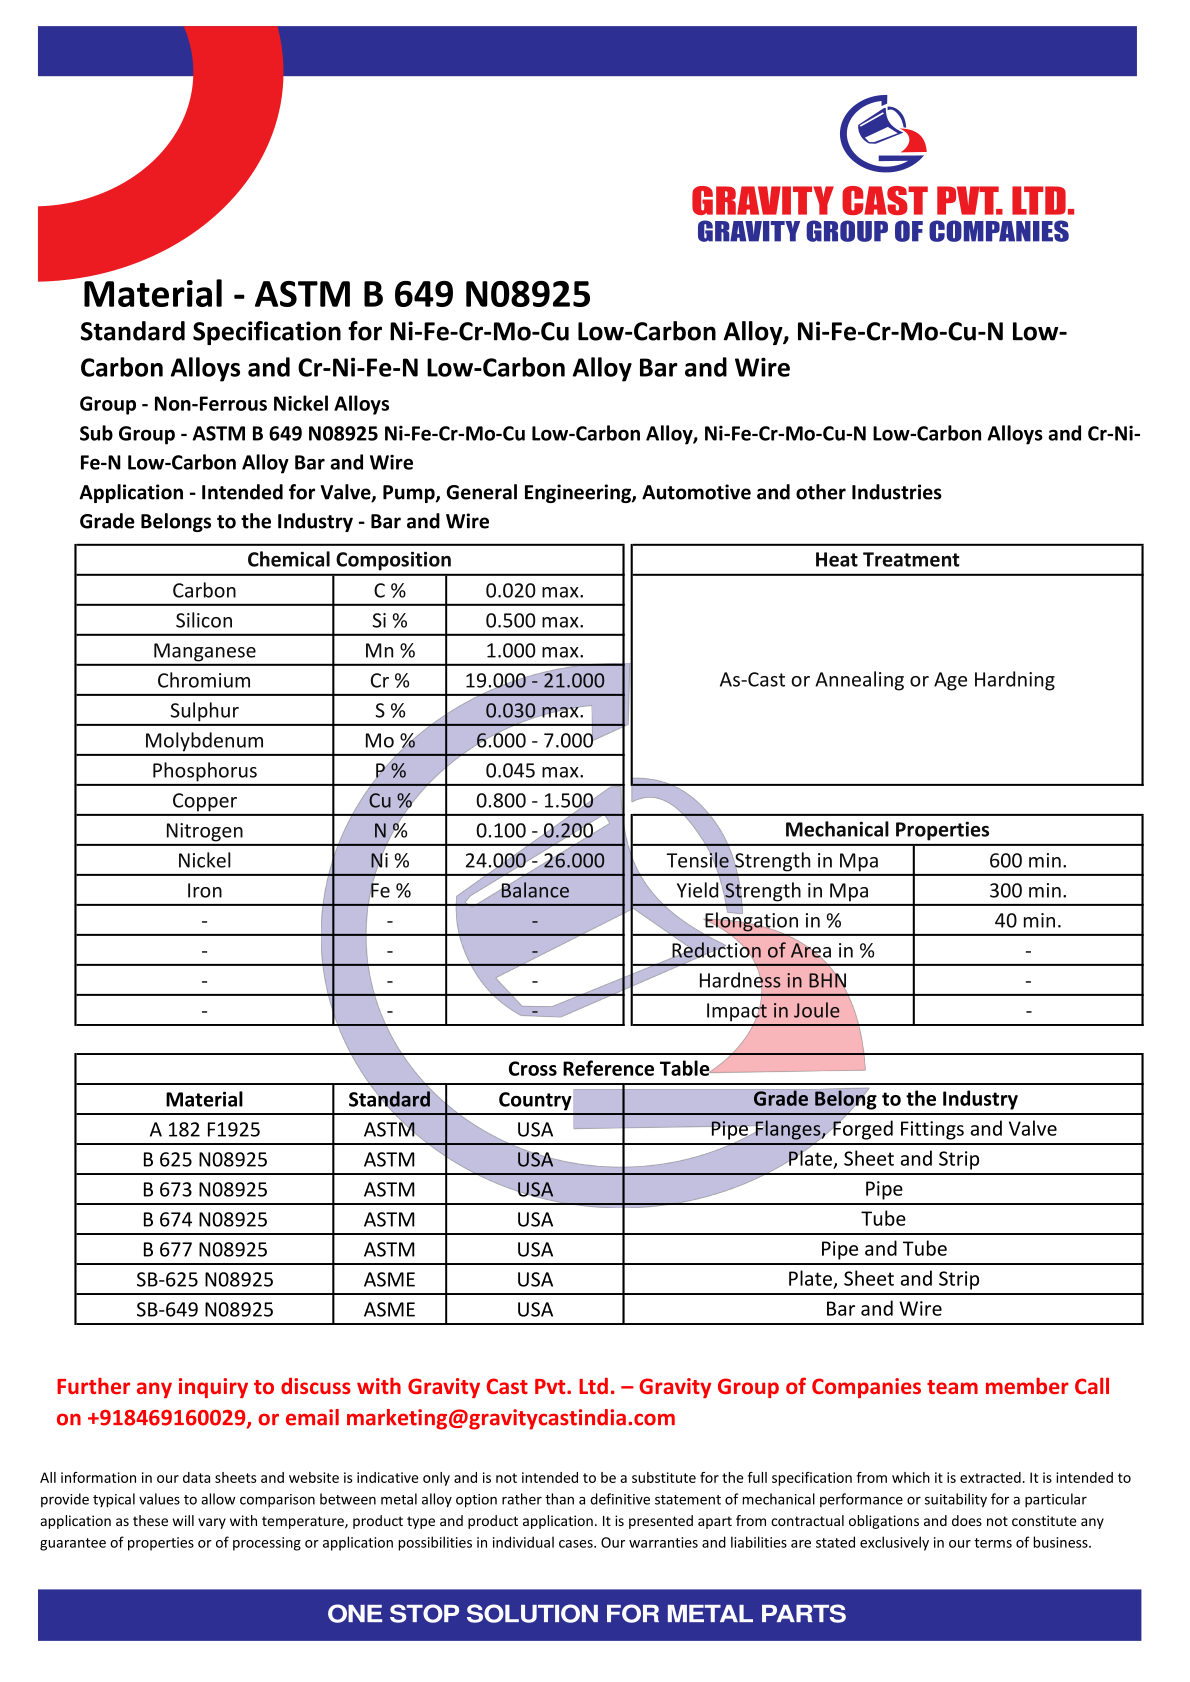 ASTM B 649 N08925.pdf